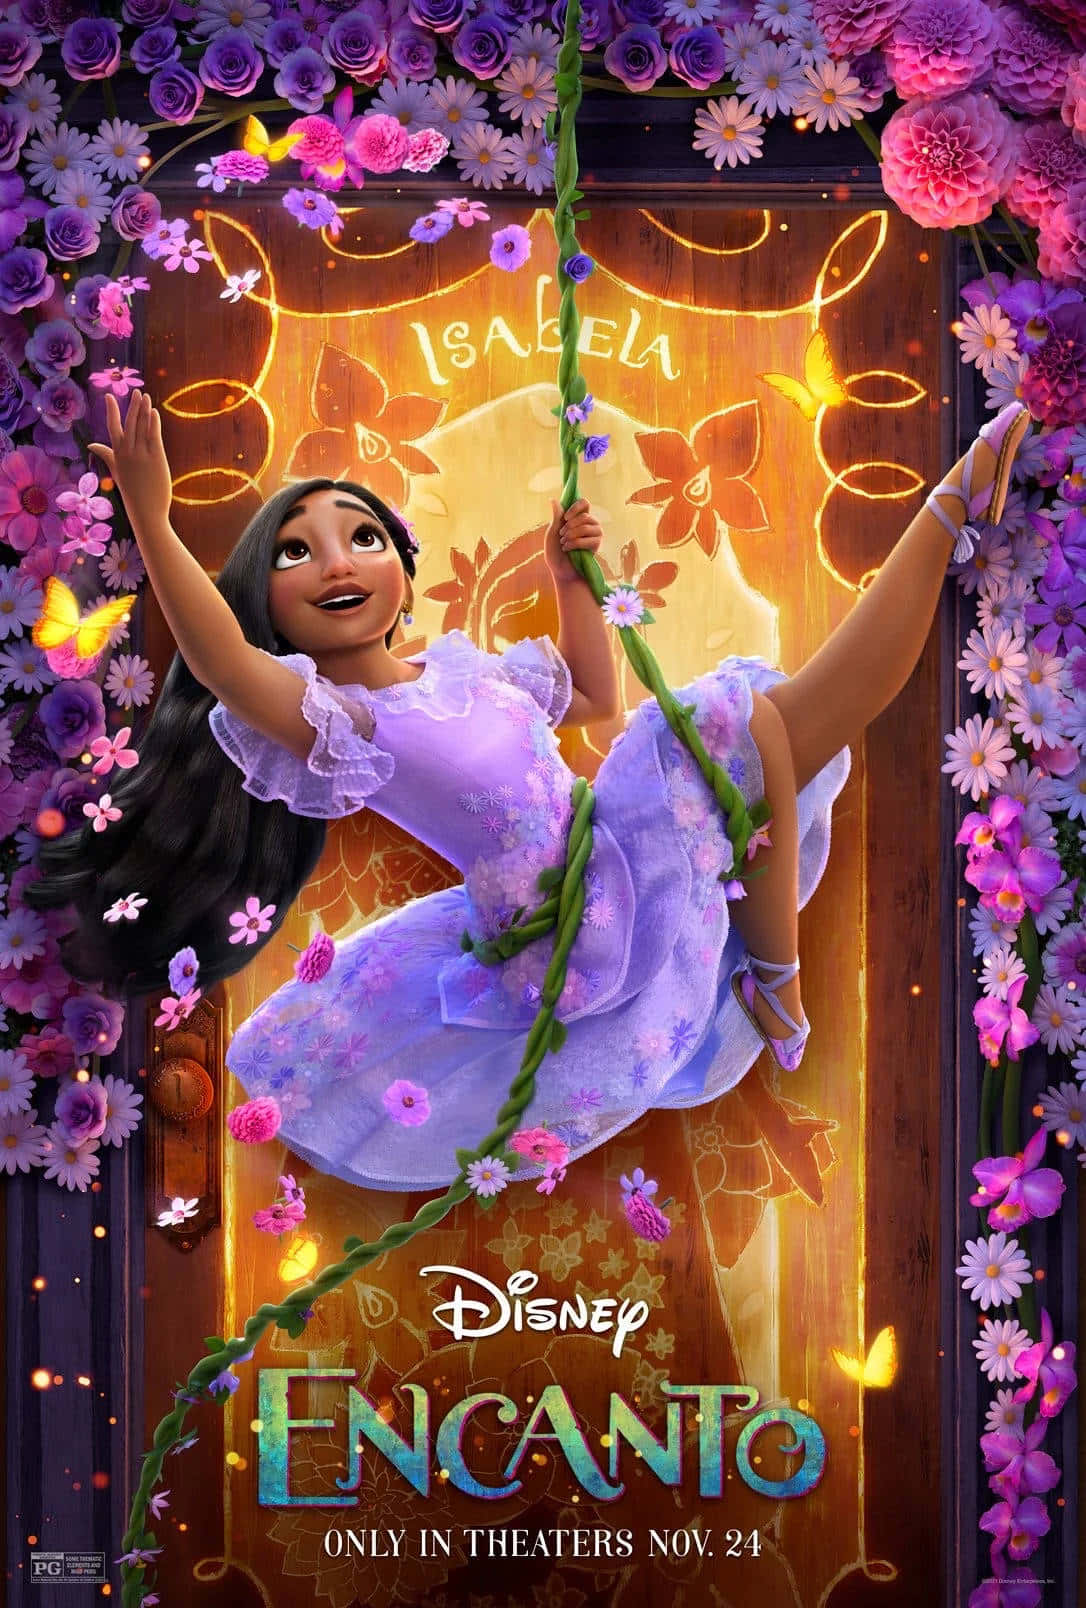 Disney Encanto plakat med en pige i en lilla kjole